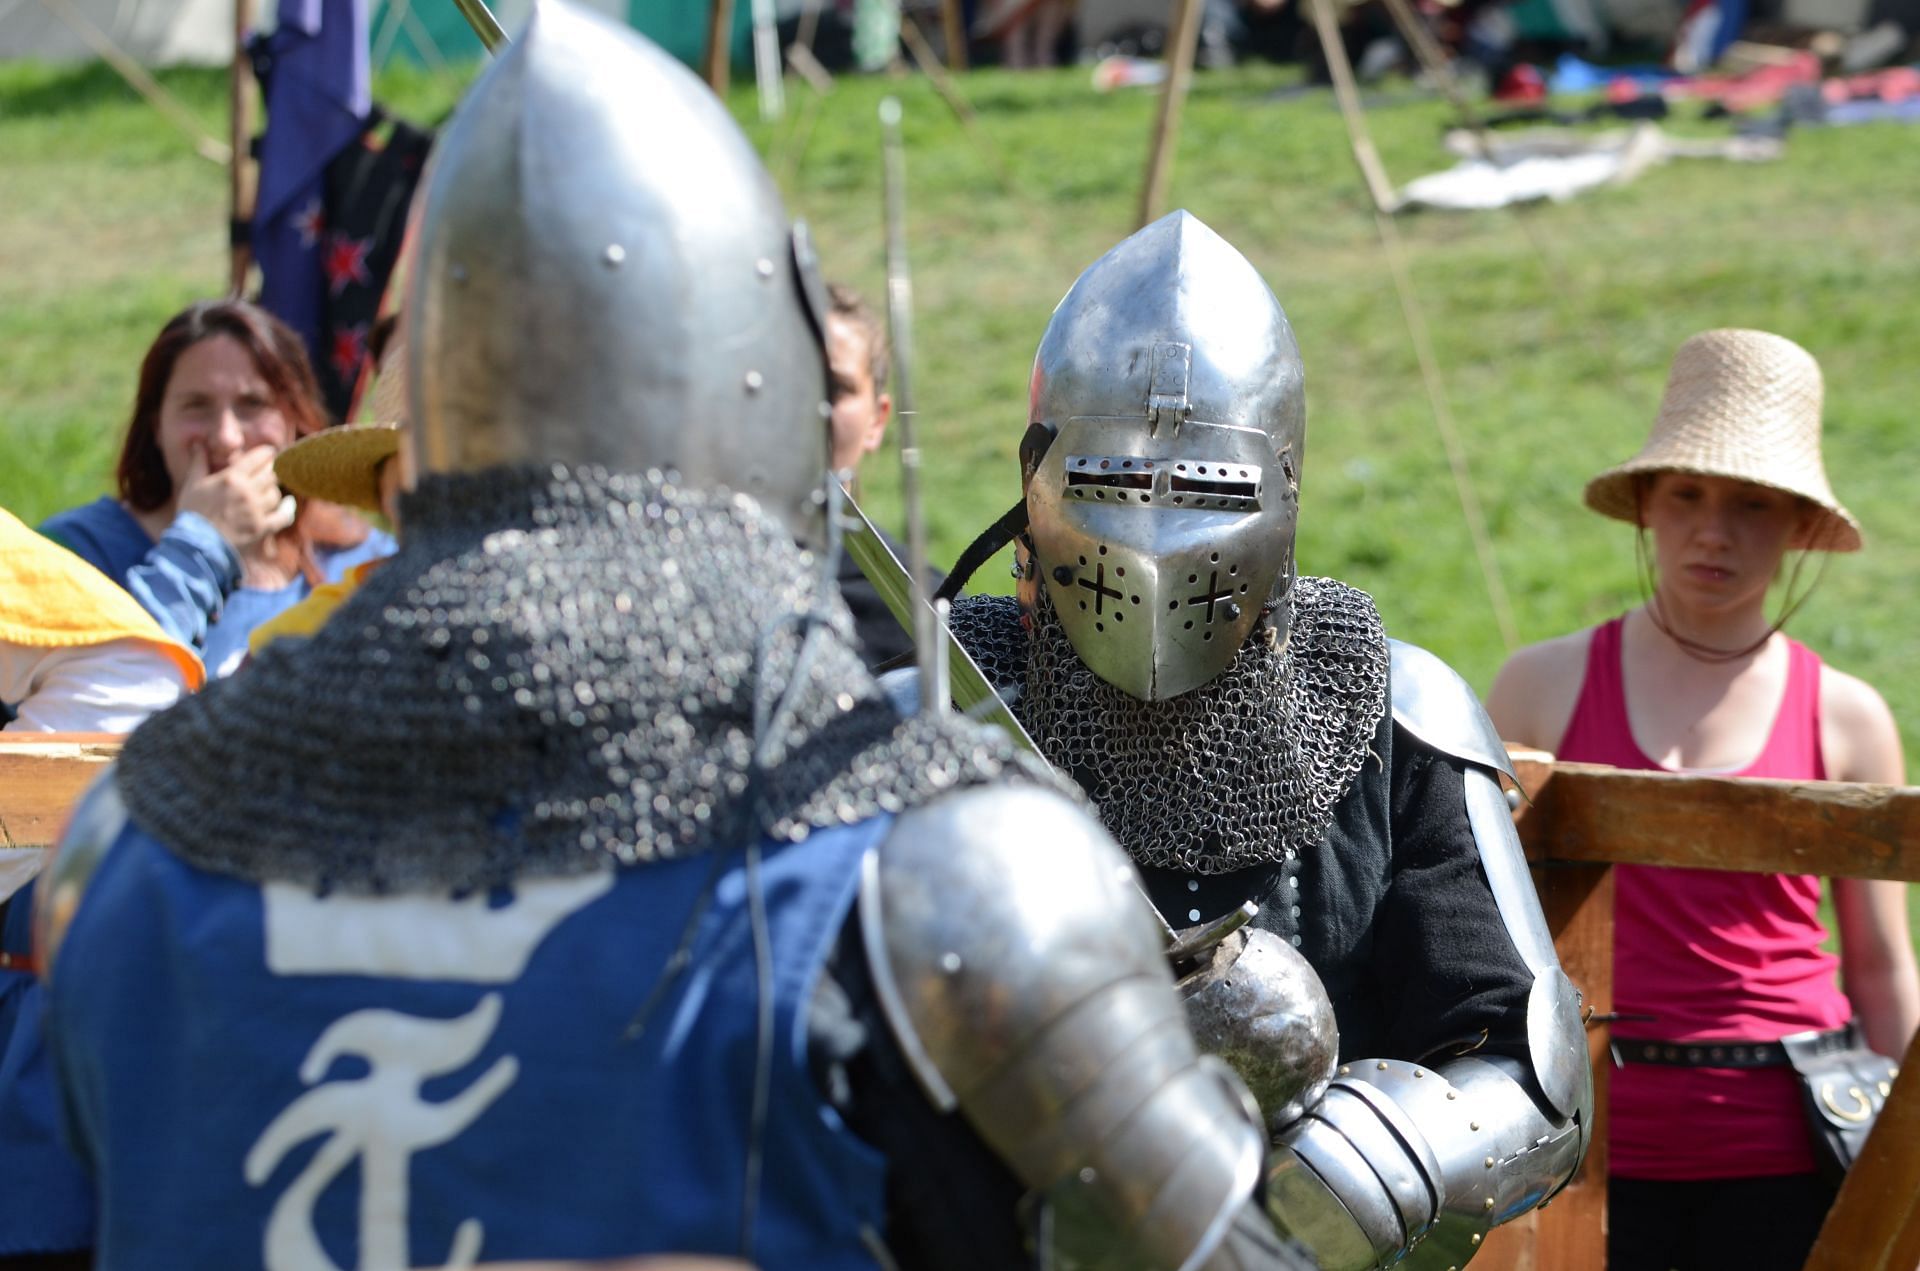 Knights took part in various tournaments. (Image via Unsplash/Jan Zikan)